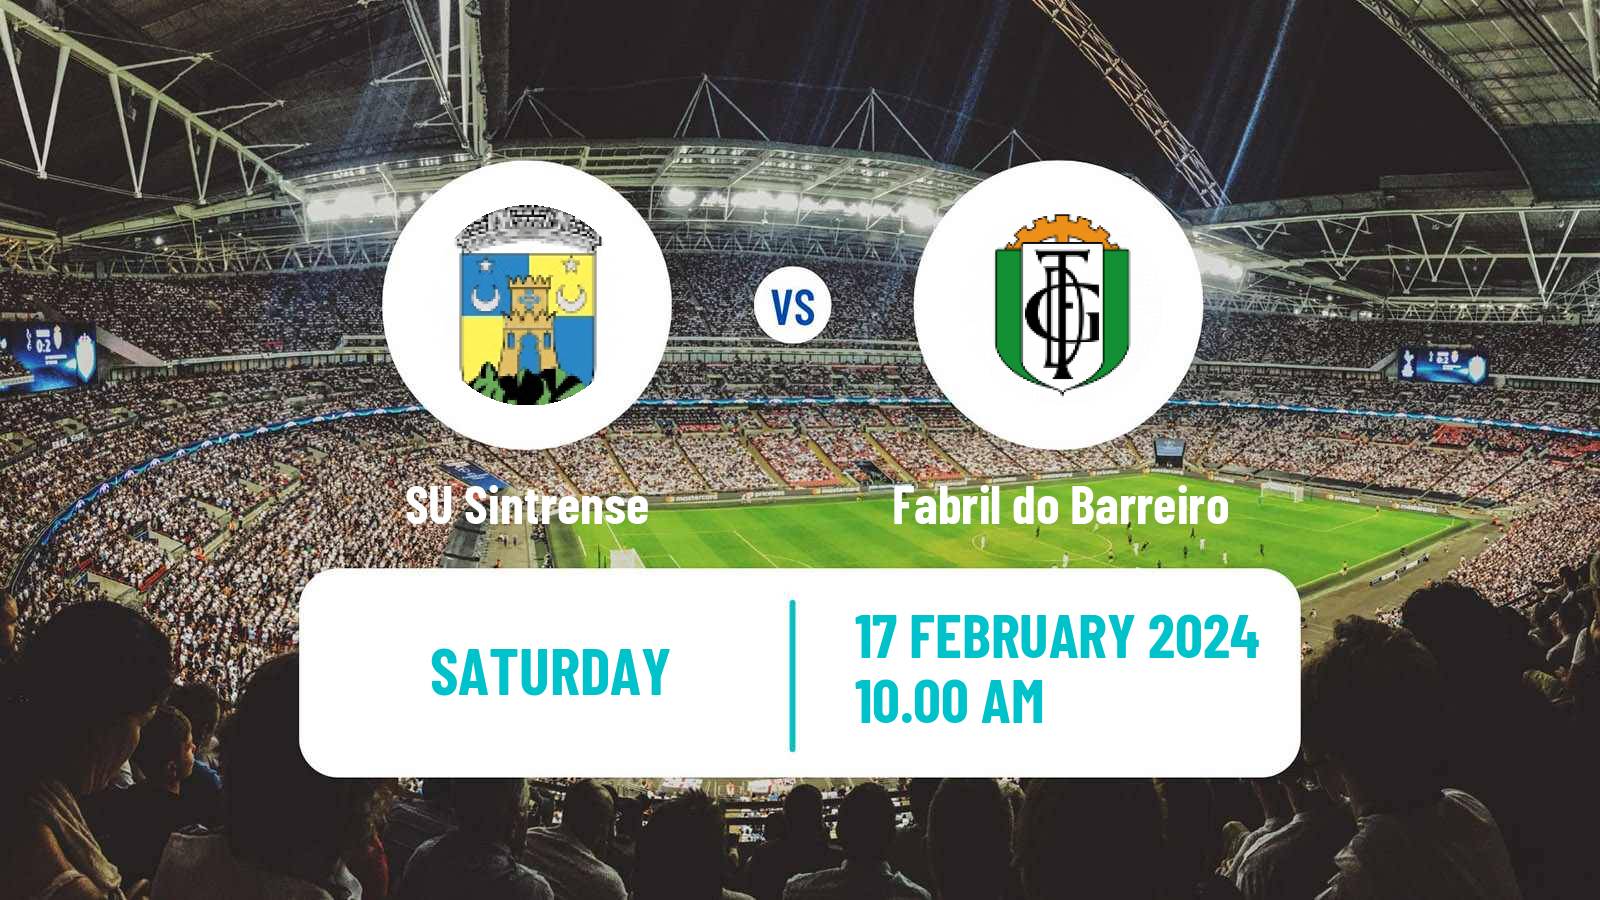 Soccer Campeonato de Portugal - Group D Sintrense - Fabril do Barreiro